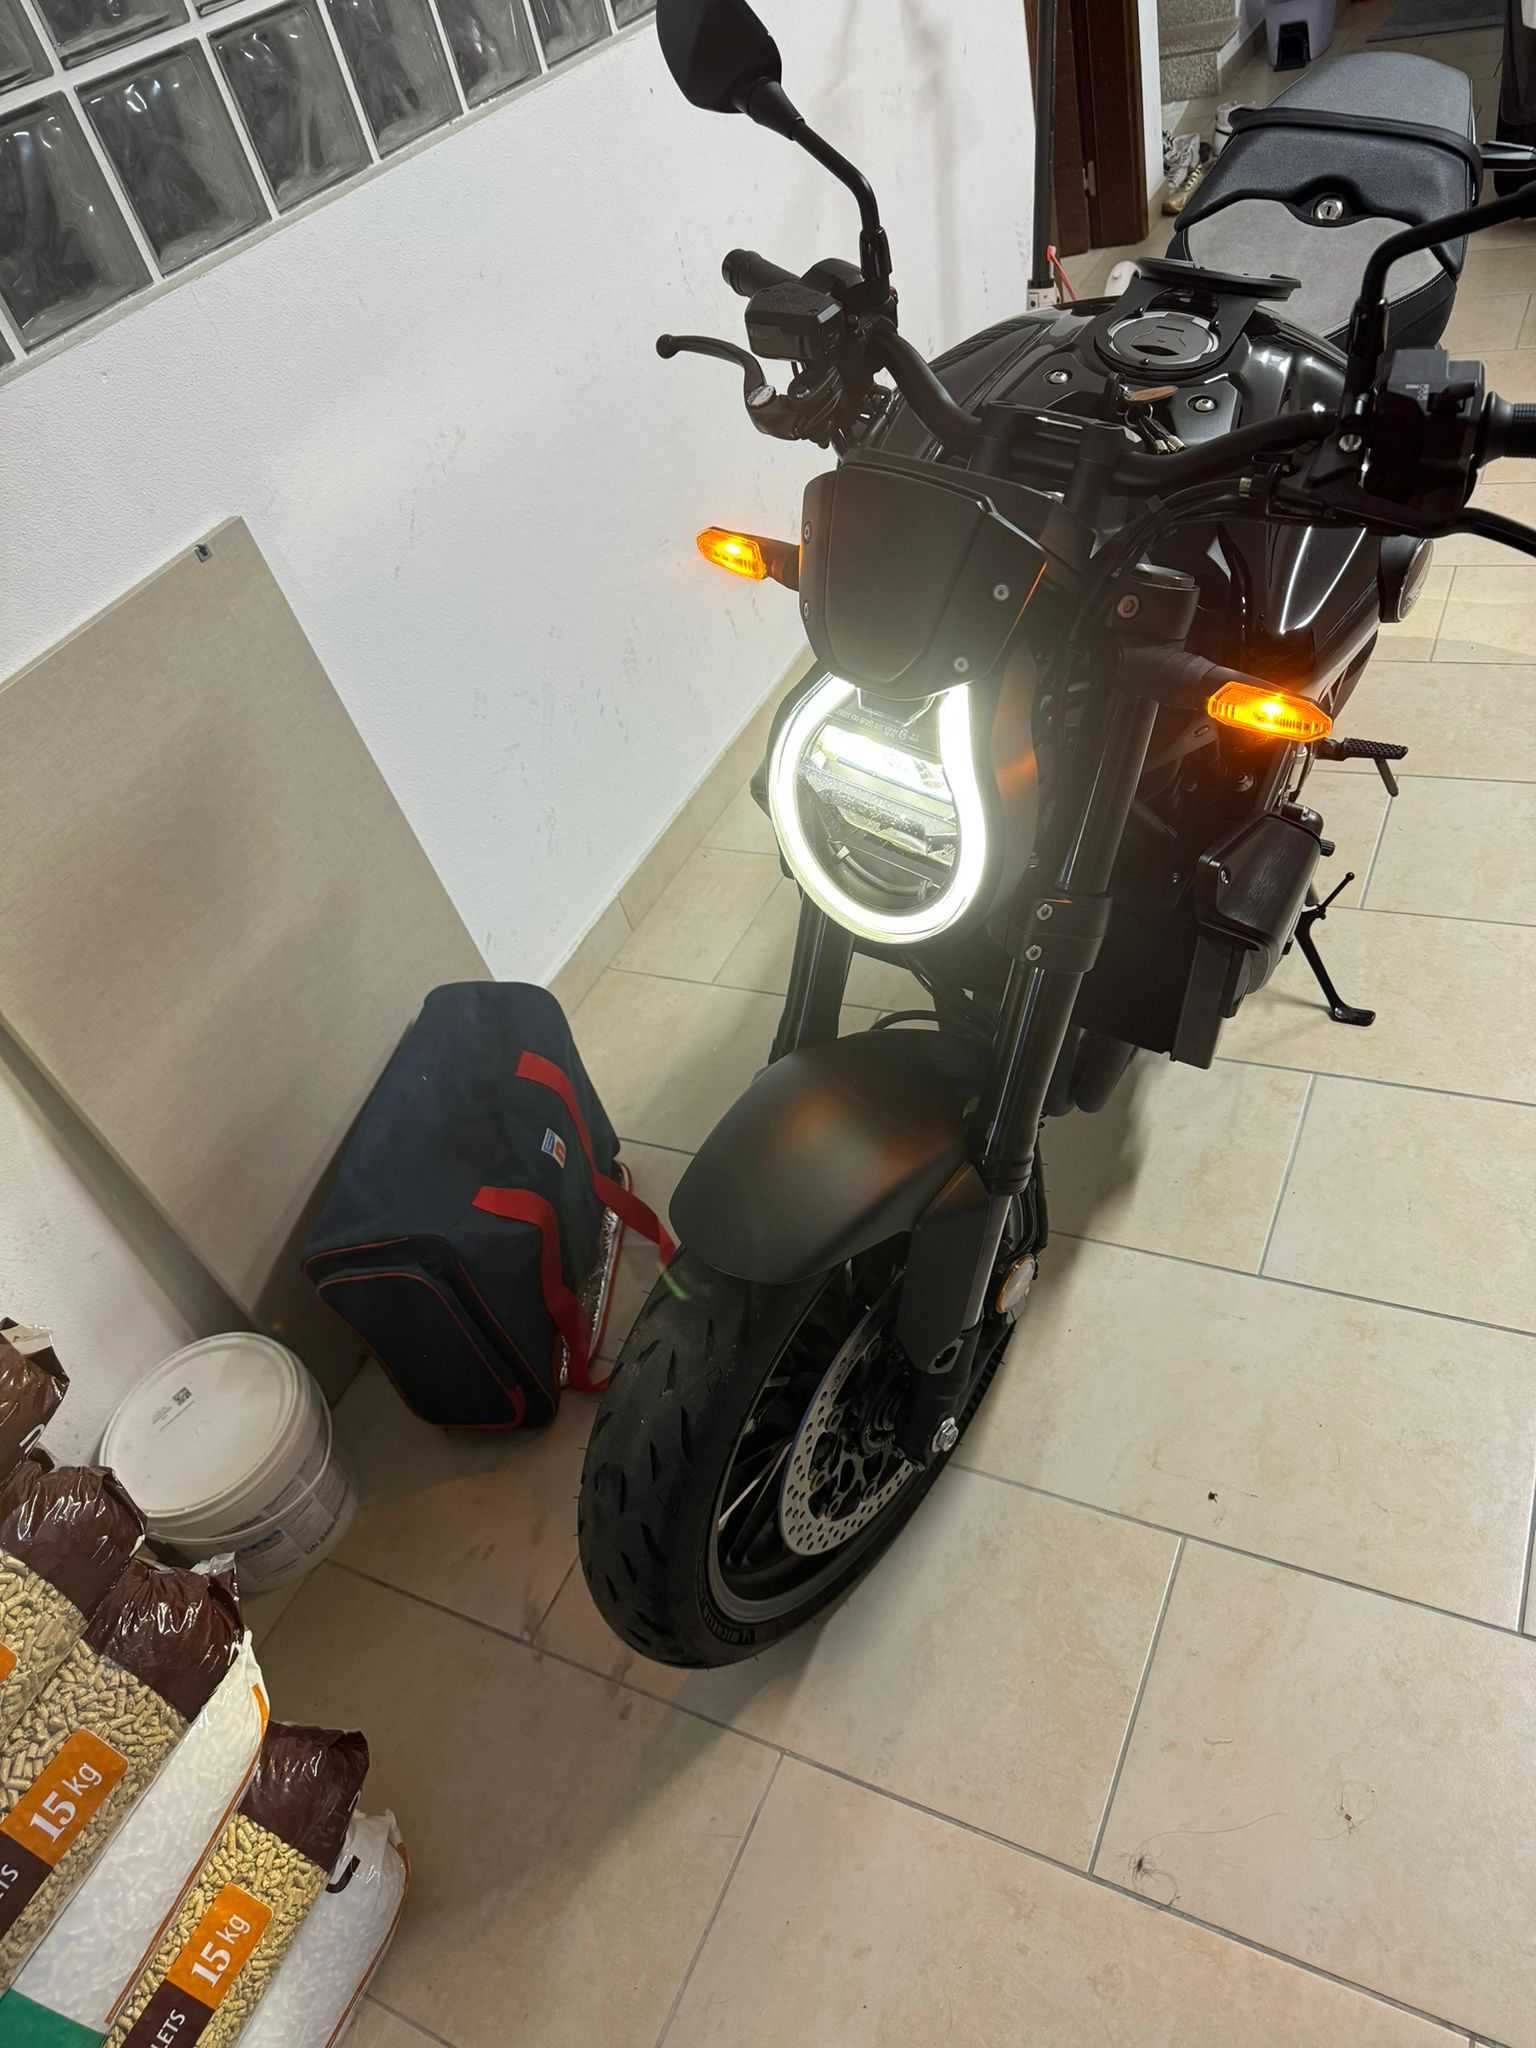 Honda CB 1000R Black Edition